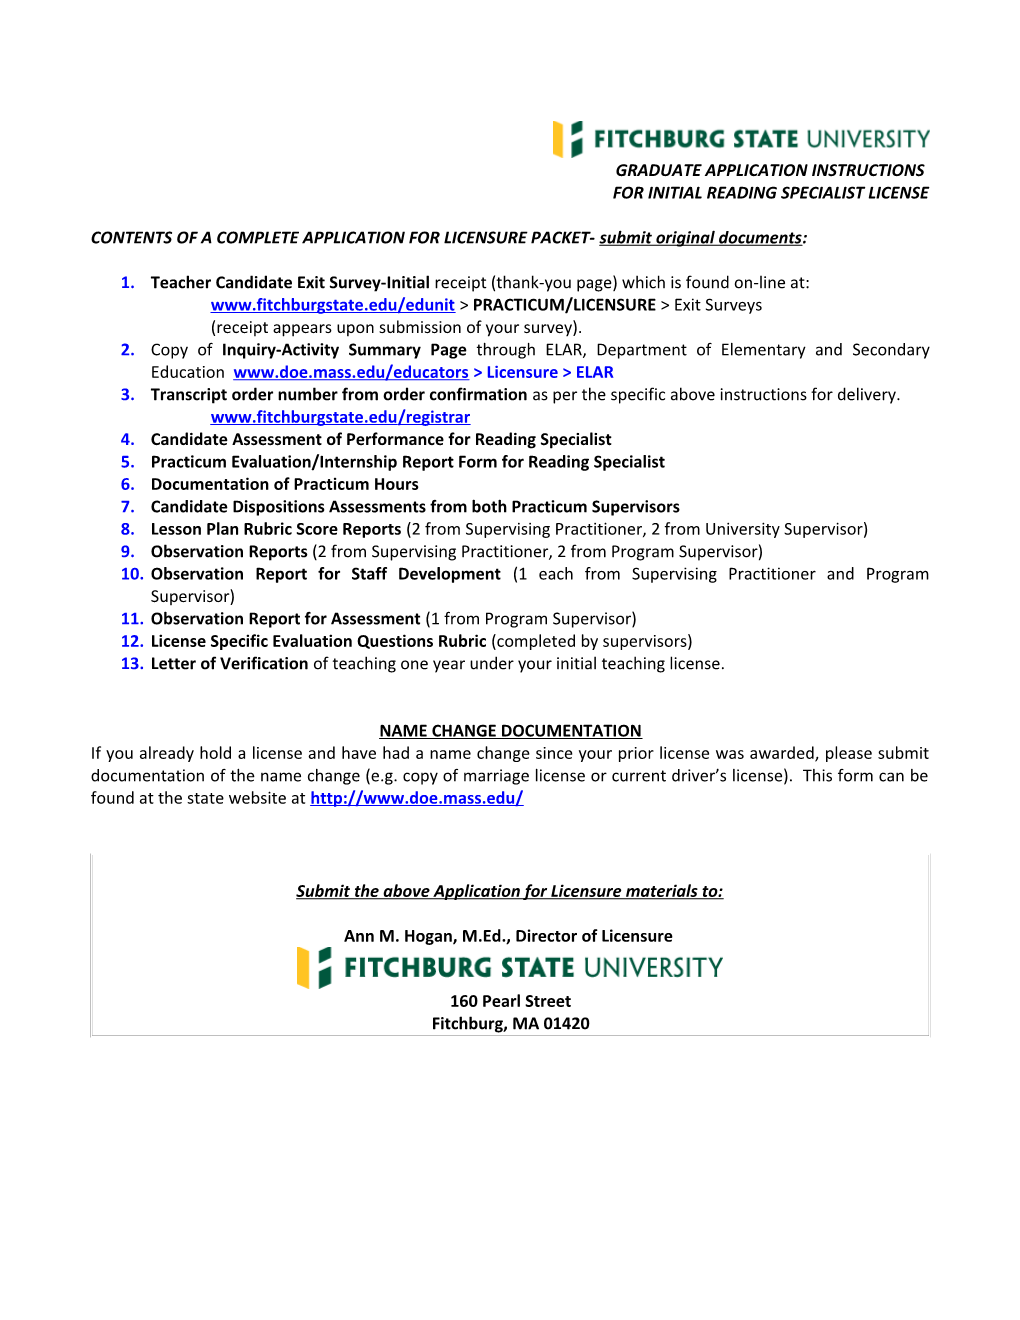 Graduate Licensure Application Instructions